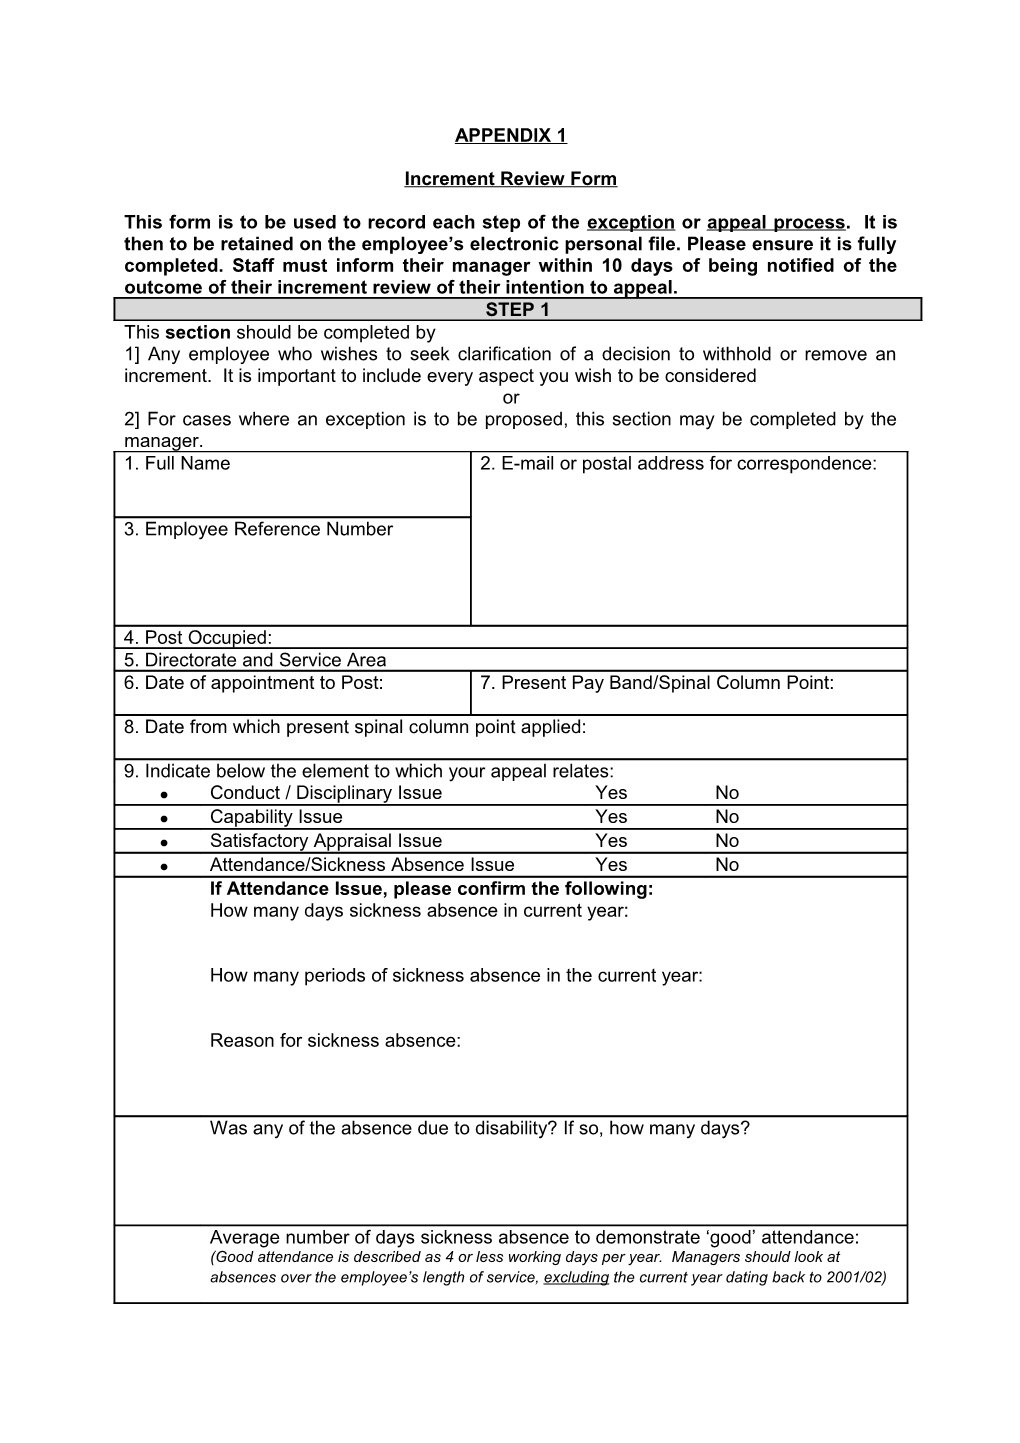 Appendix 1 - Increment Review Form